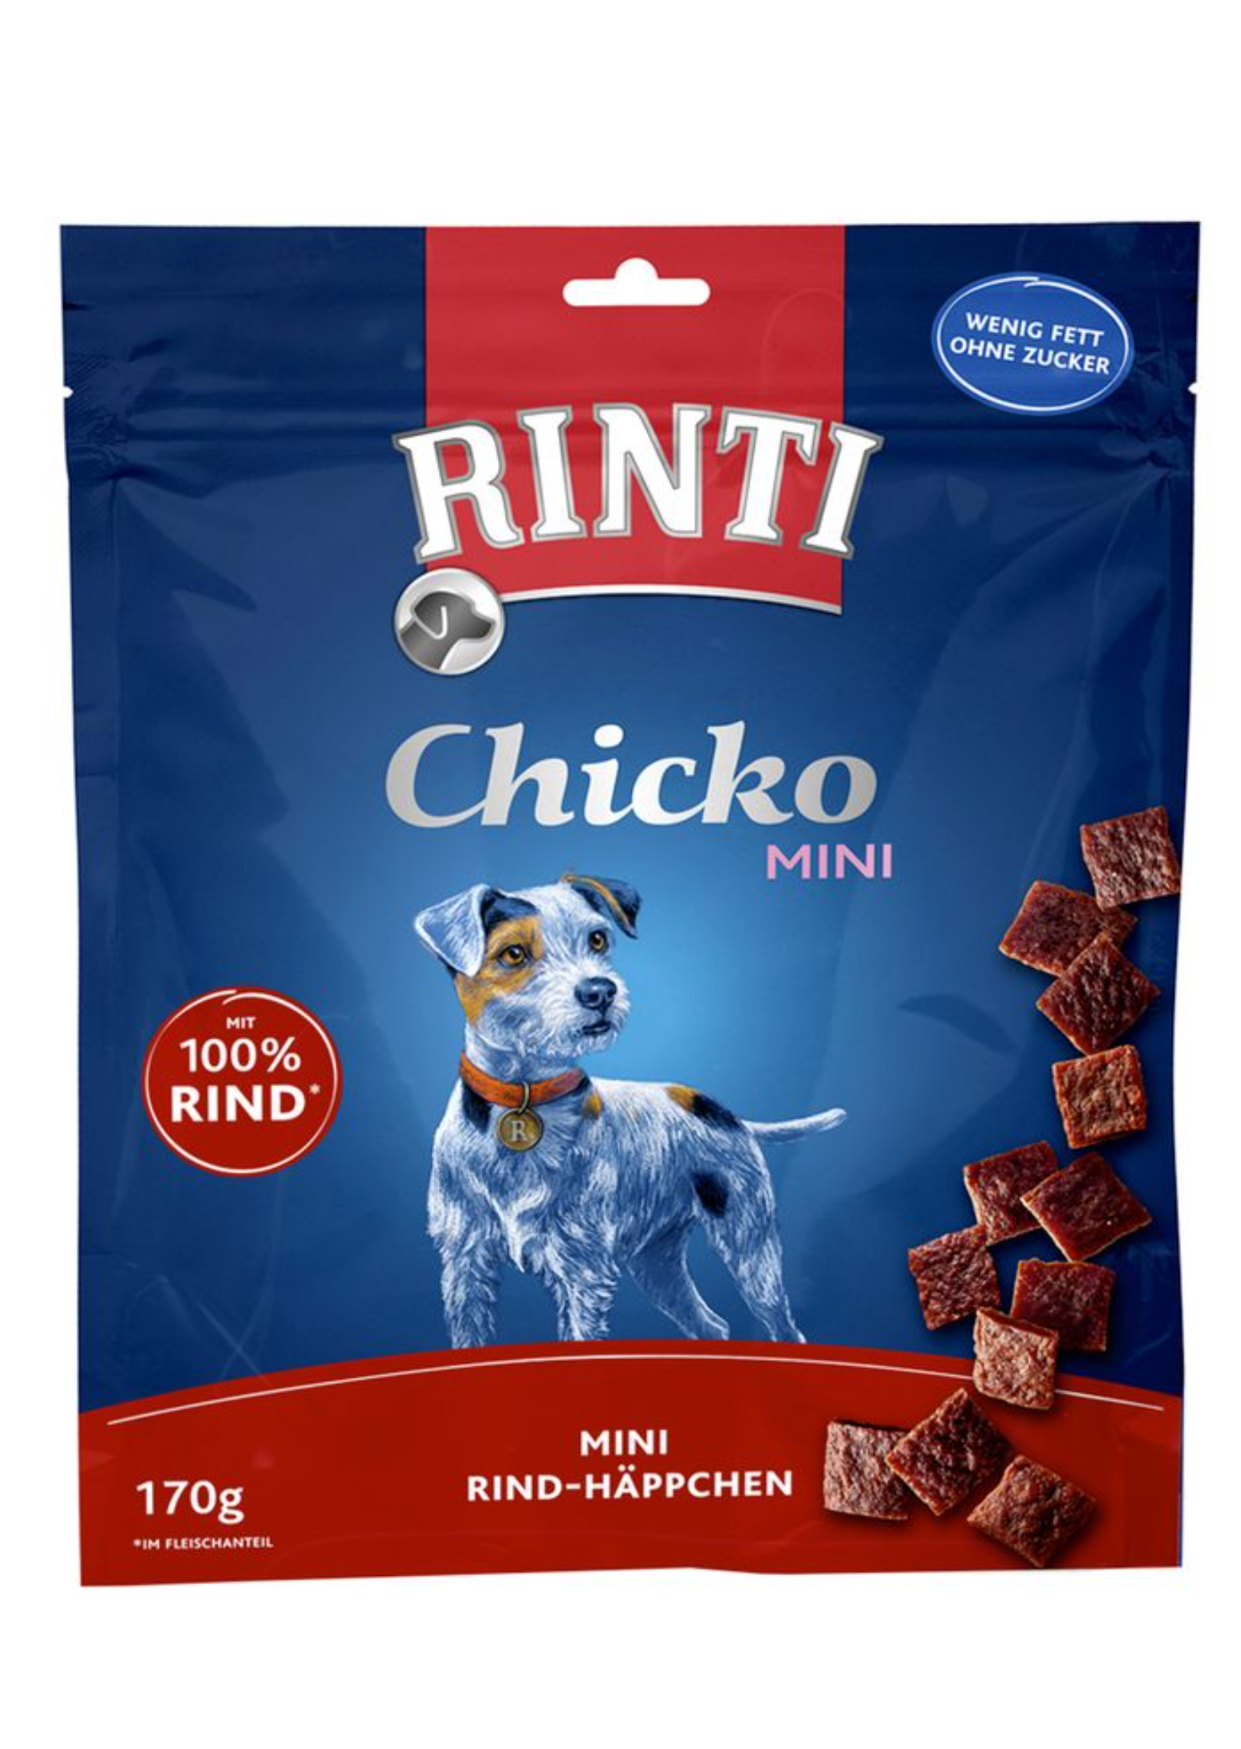 Rinti Chicko mini - Rind